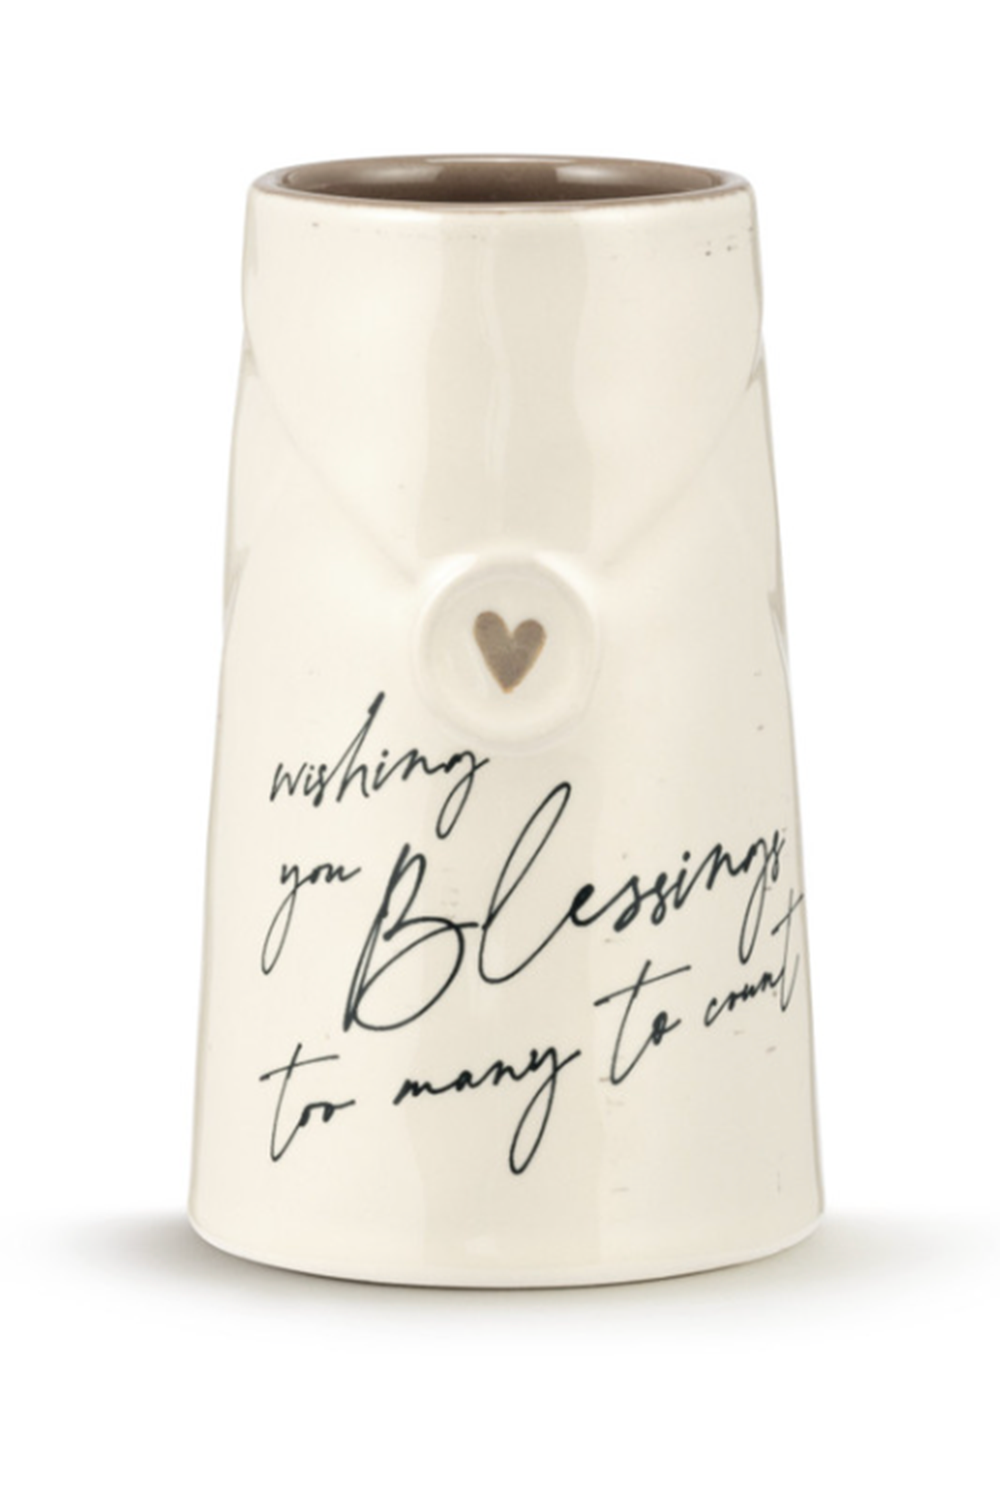 Mini "Dear You" Vase - Blessings